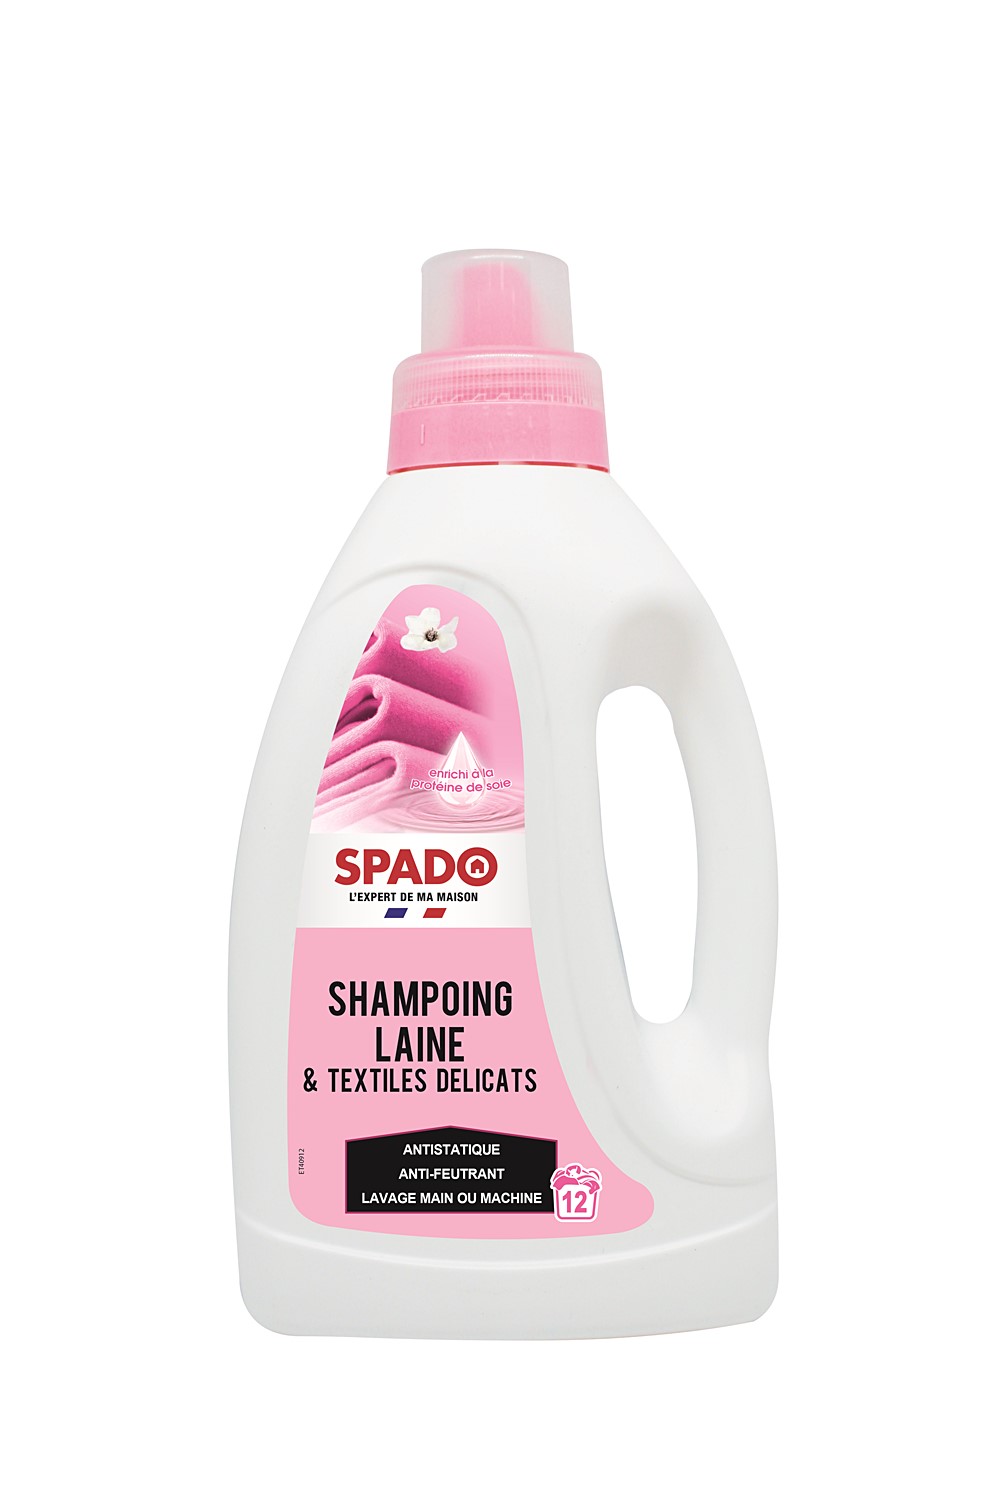 Spado shampooing laine 750 ml